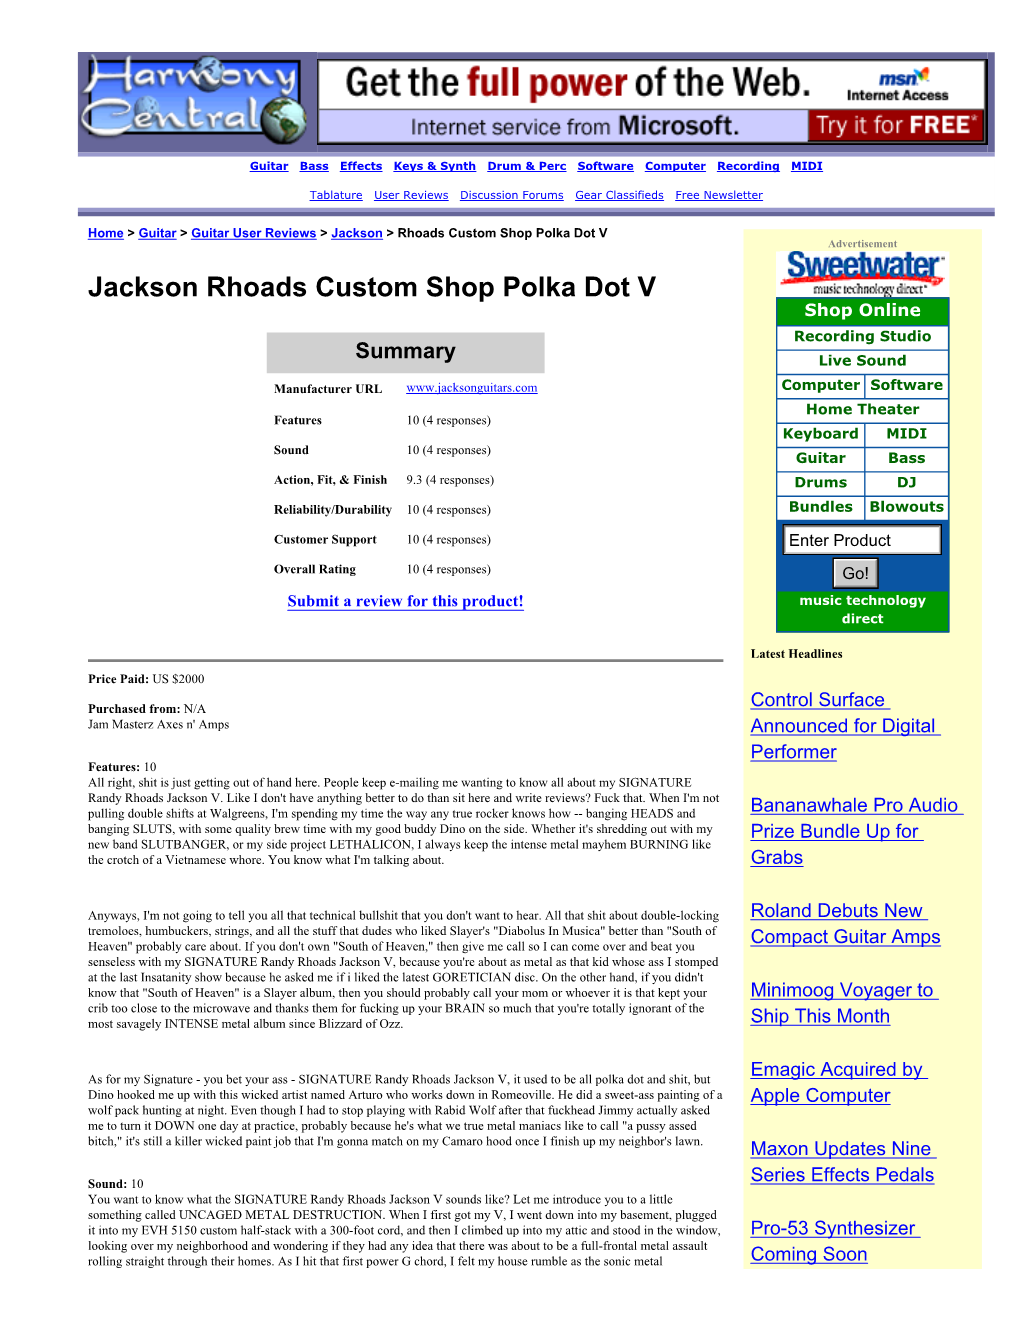 Jackson Rhoads Custom Shop Polka Dot V Shop Online Recording Studio Summary Live Sound